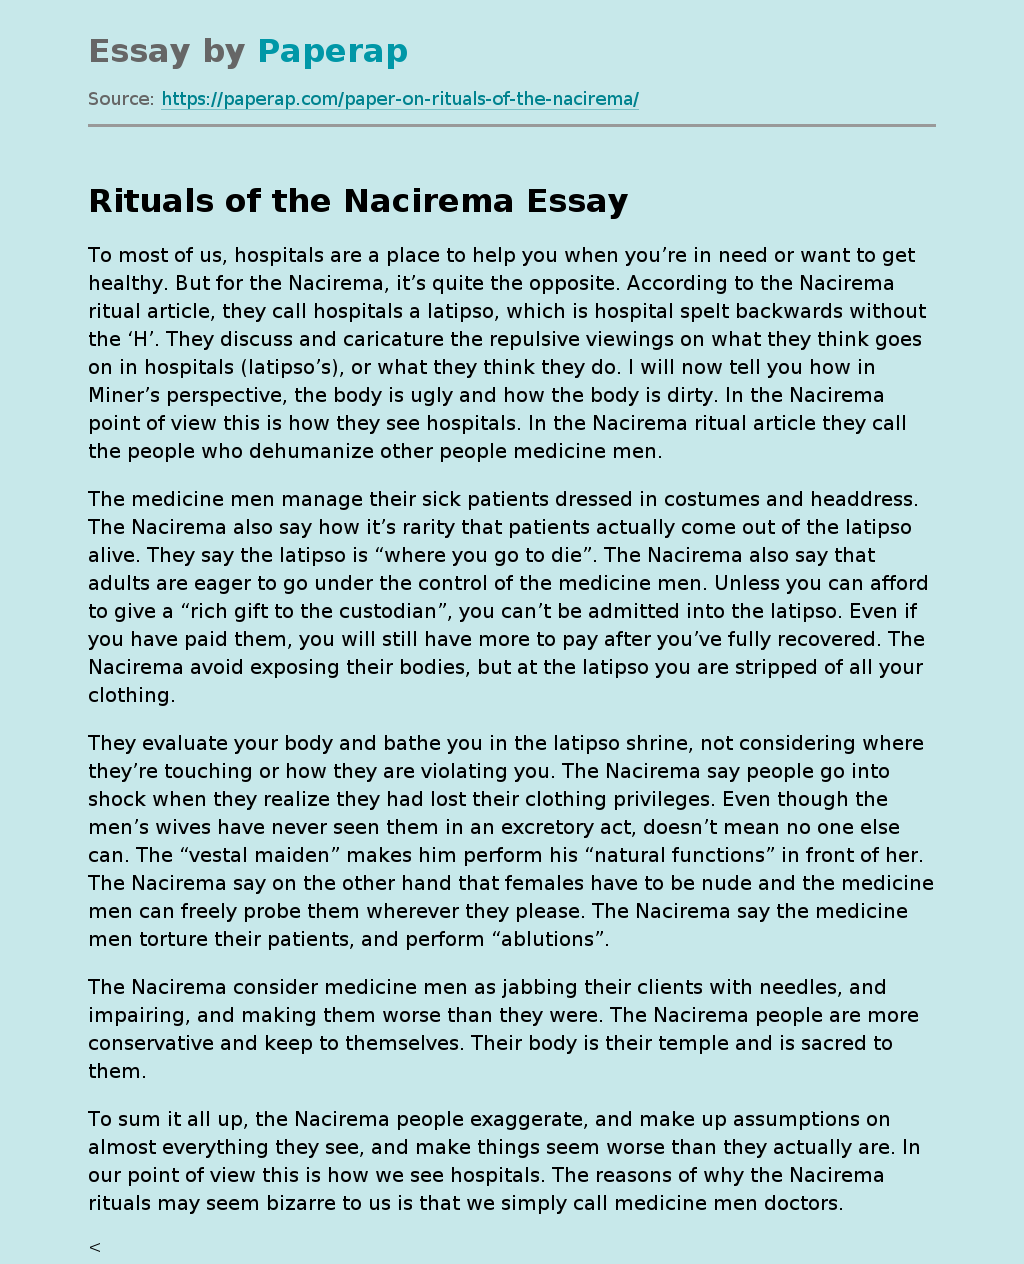 Rituals of the Nacirema